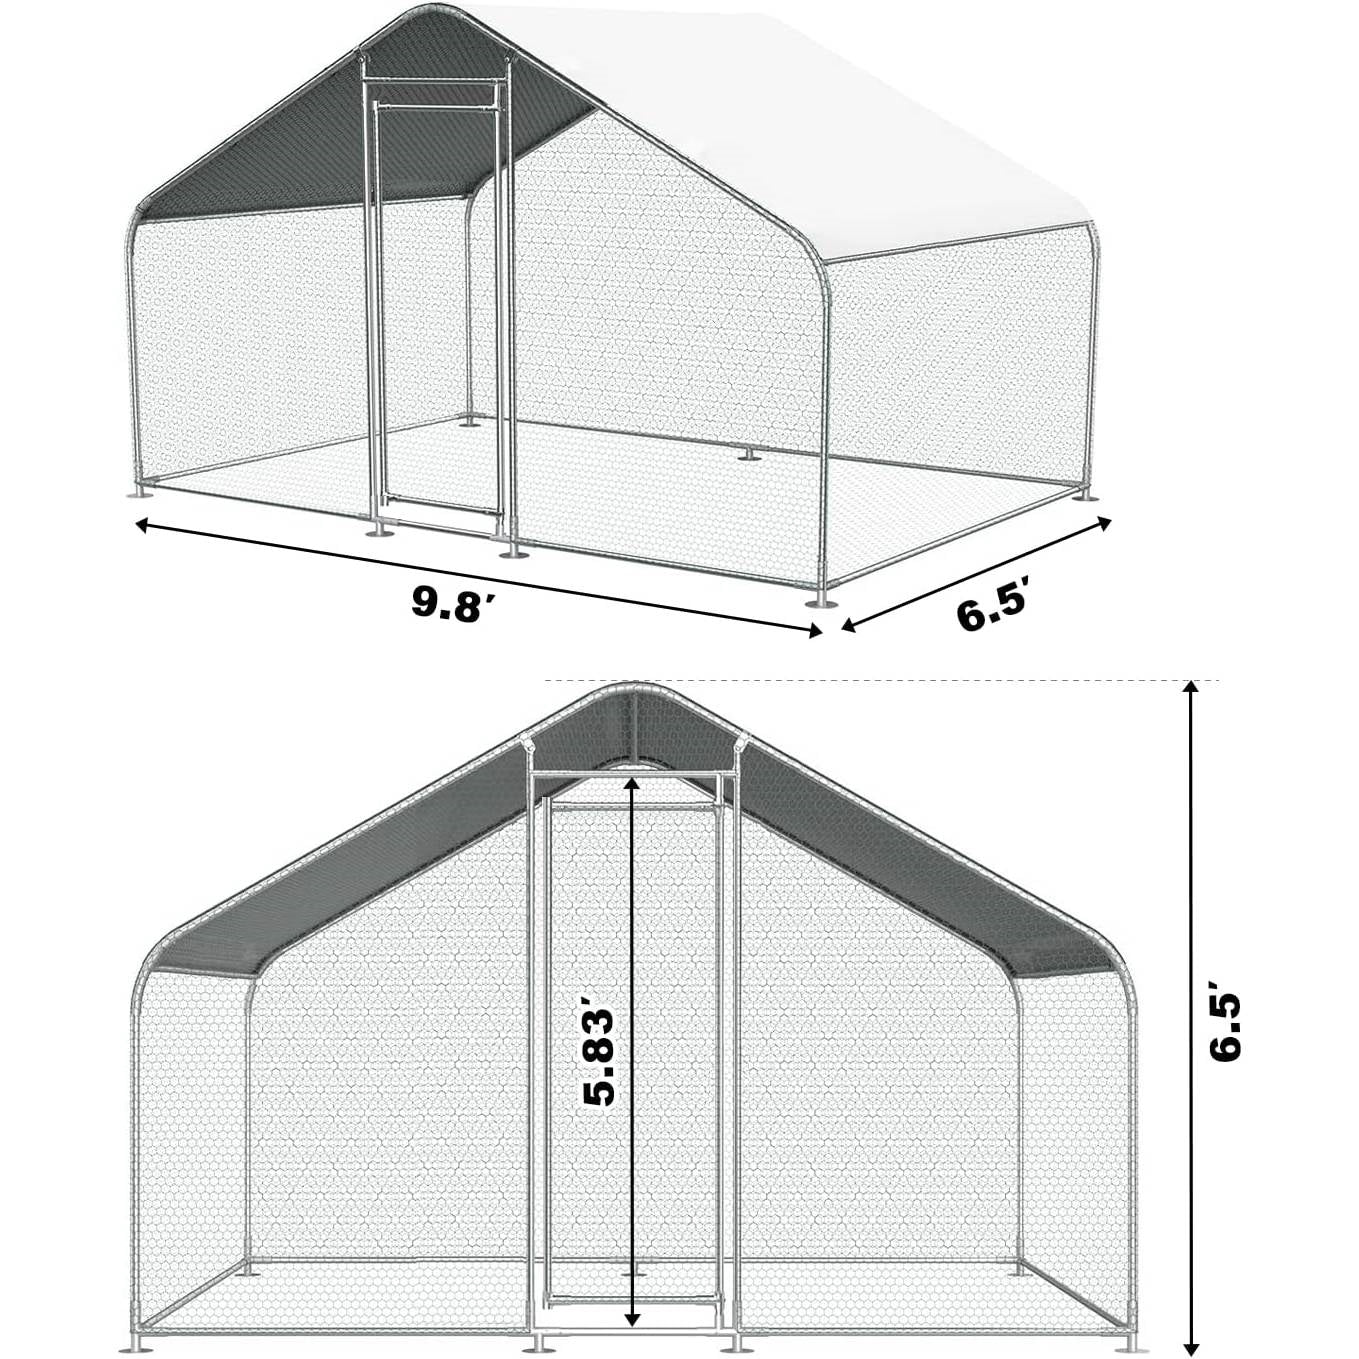 9.8 Ft x 6.5 Ft. Large Metal Outdoor Walk-in Chicken Coop with Waterproof Cover